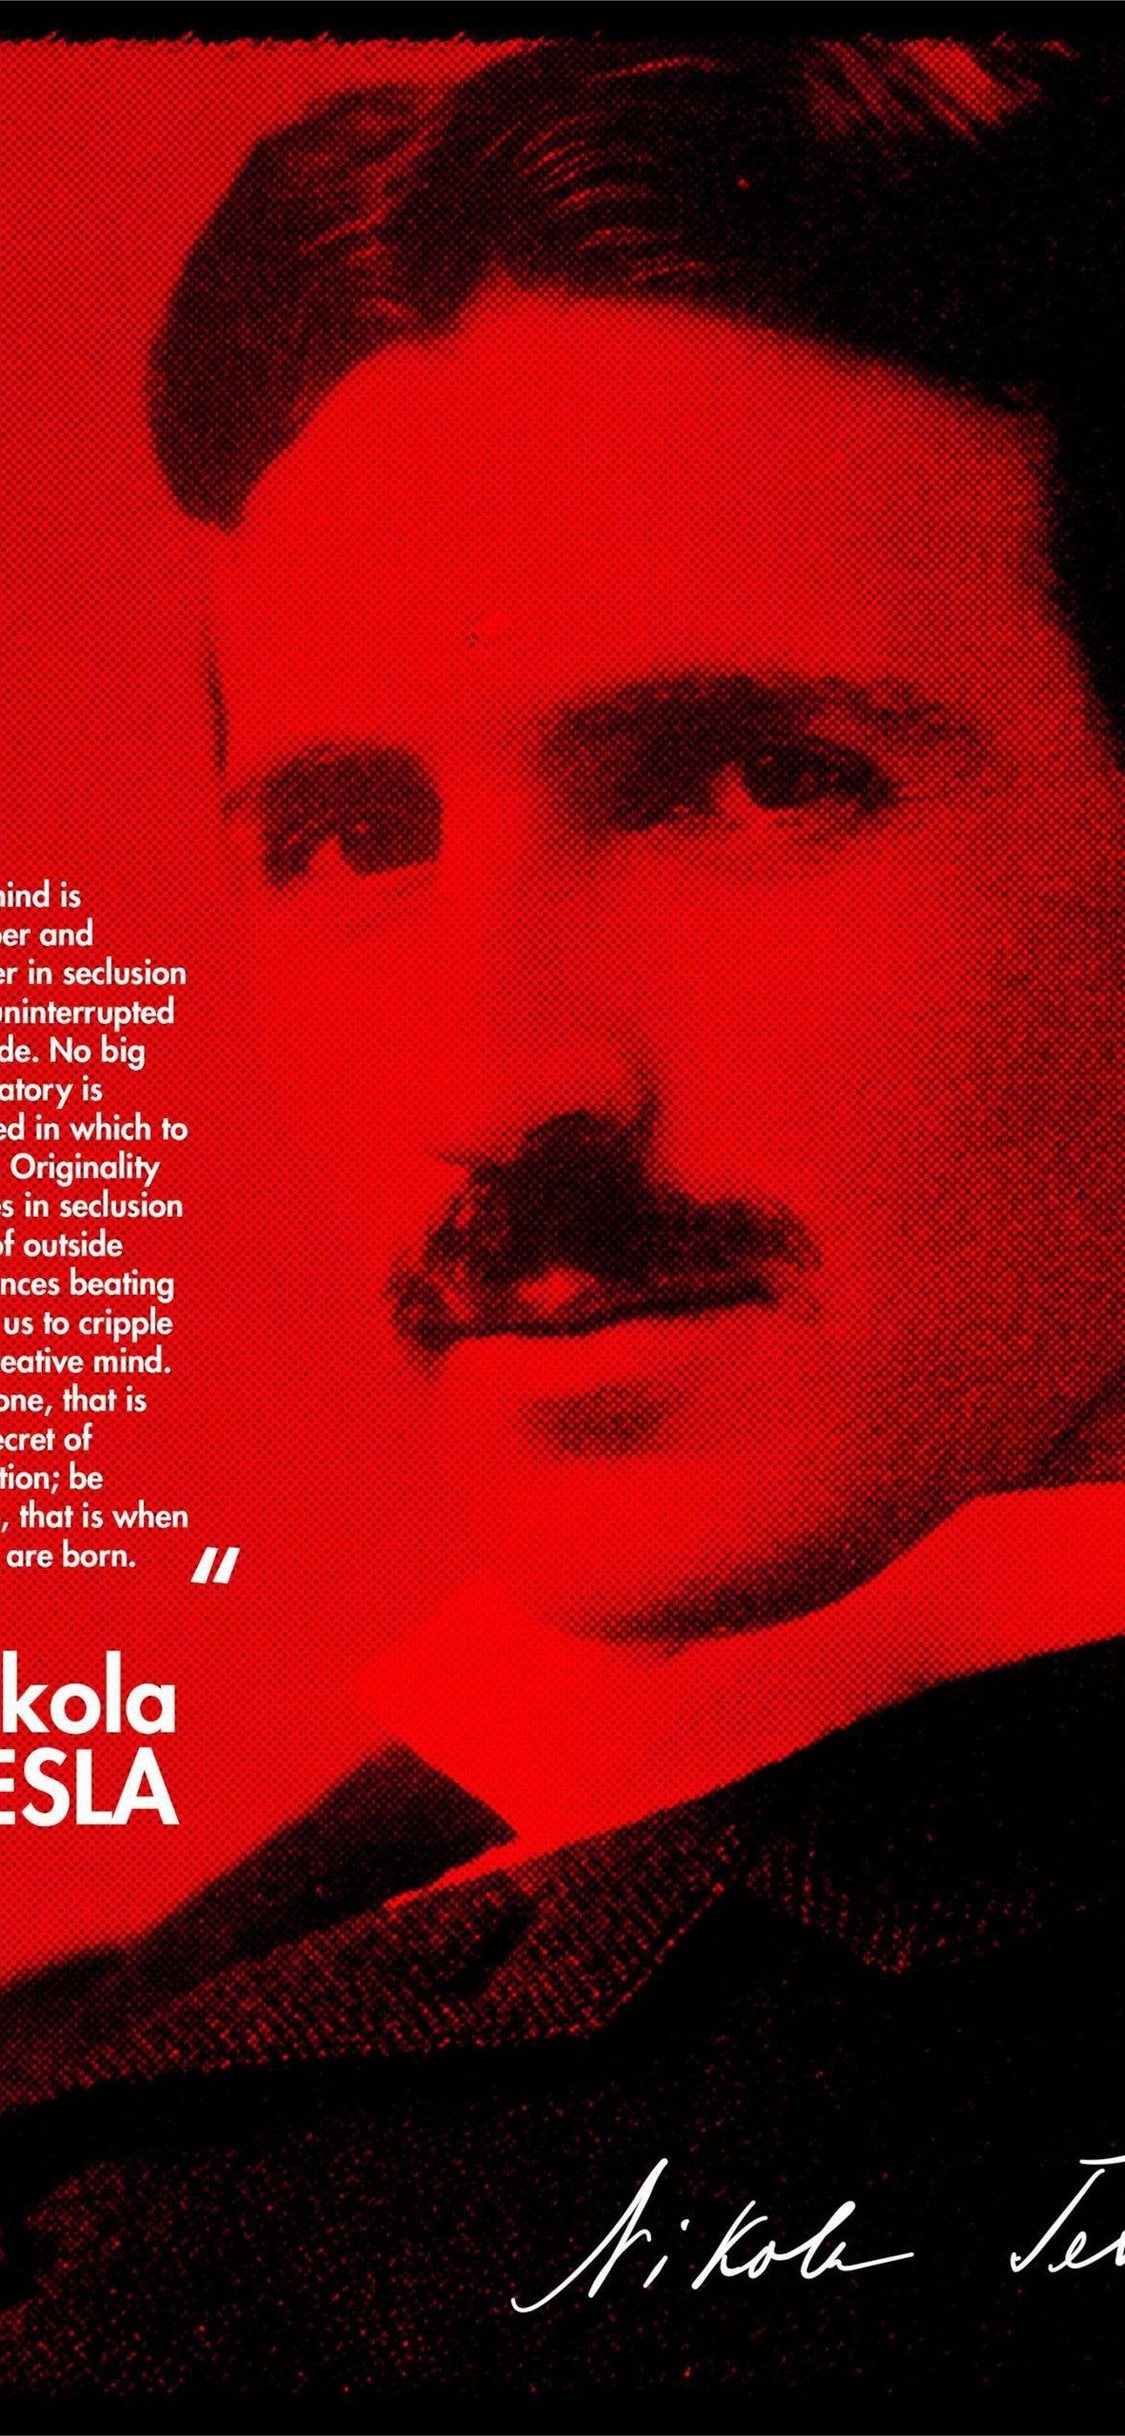 Nikola Tesla Quotes Top Free Nikola Tesla Quotes B... iPhone Wallpapers  Free Download